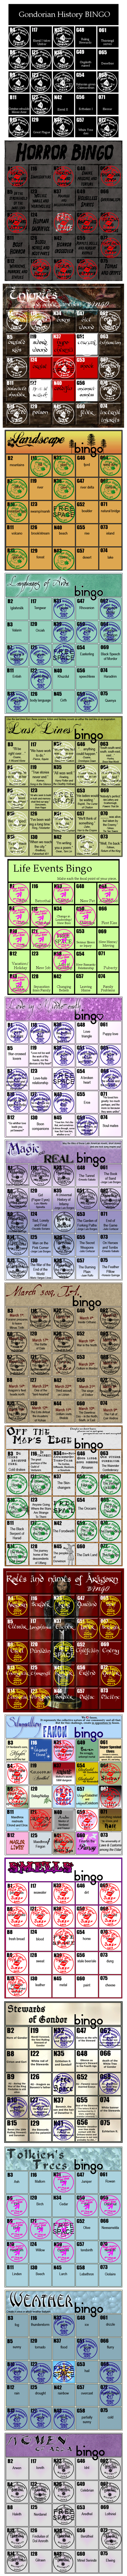 Mirach's Bingo Cards